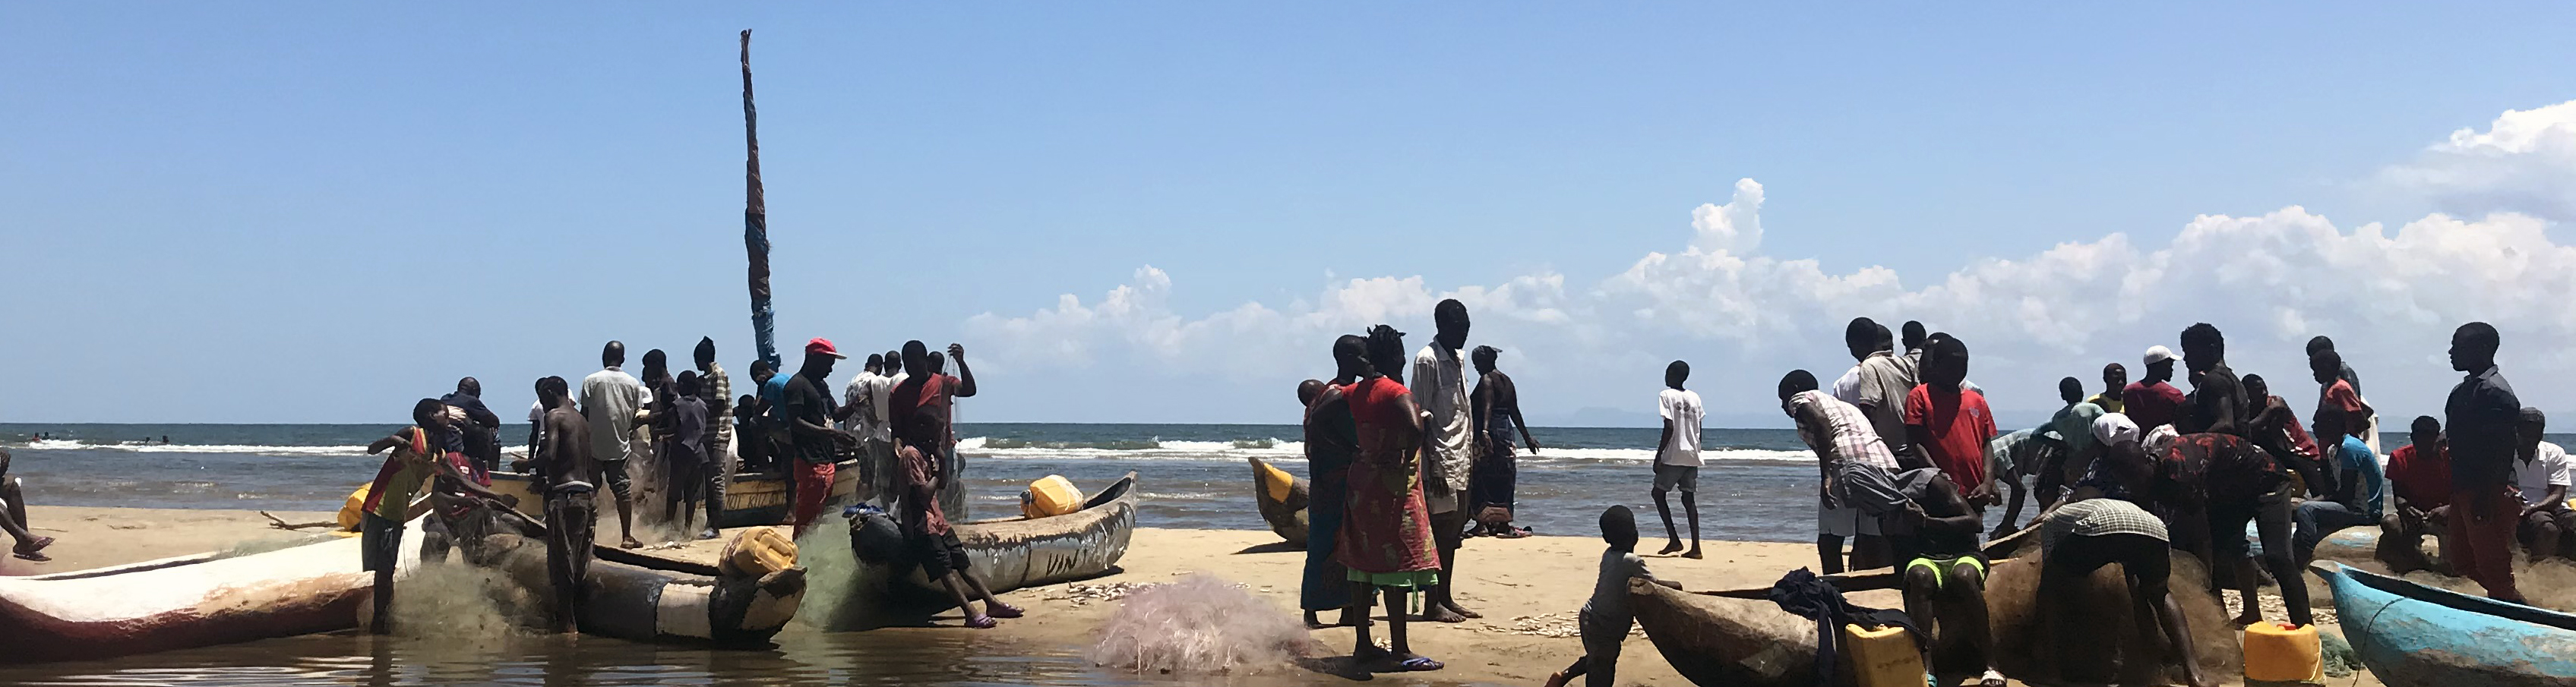 Fishers from Lifuwu Village, Malawi, on Lake Malawi. Credit Teal Guetshow.